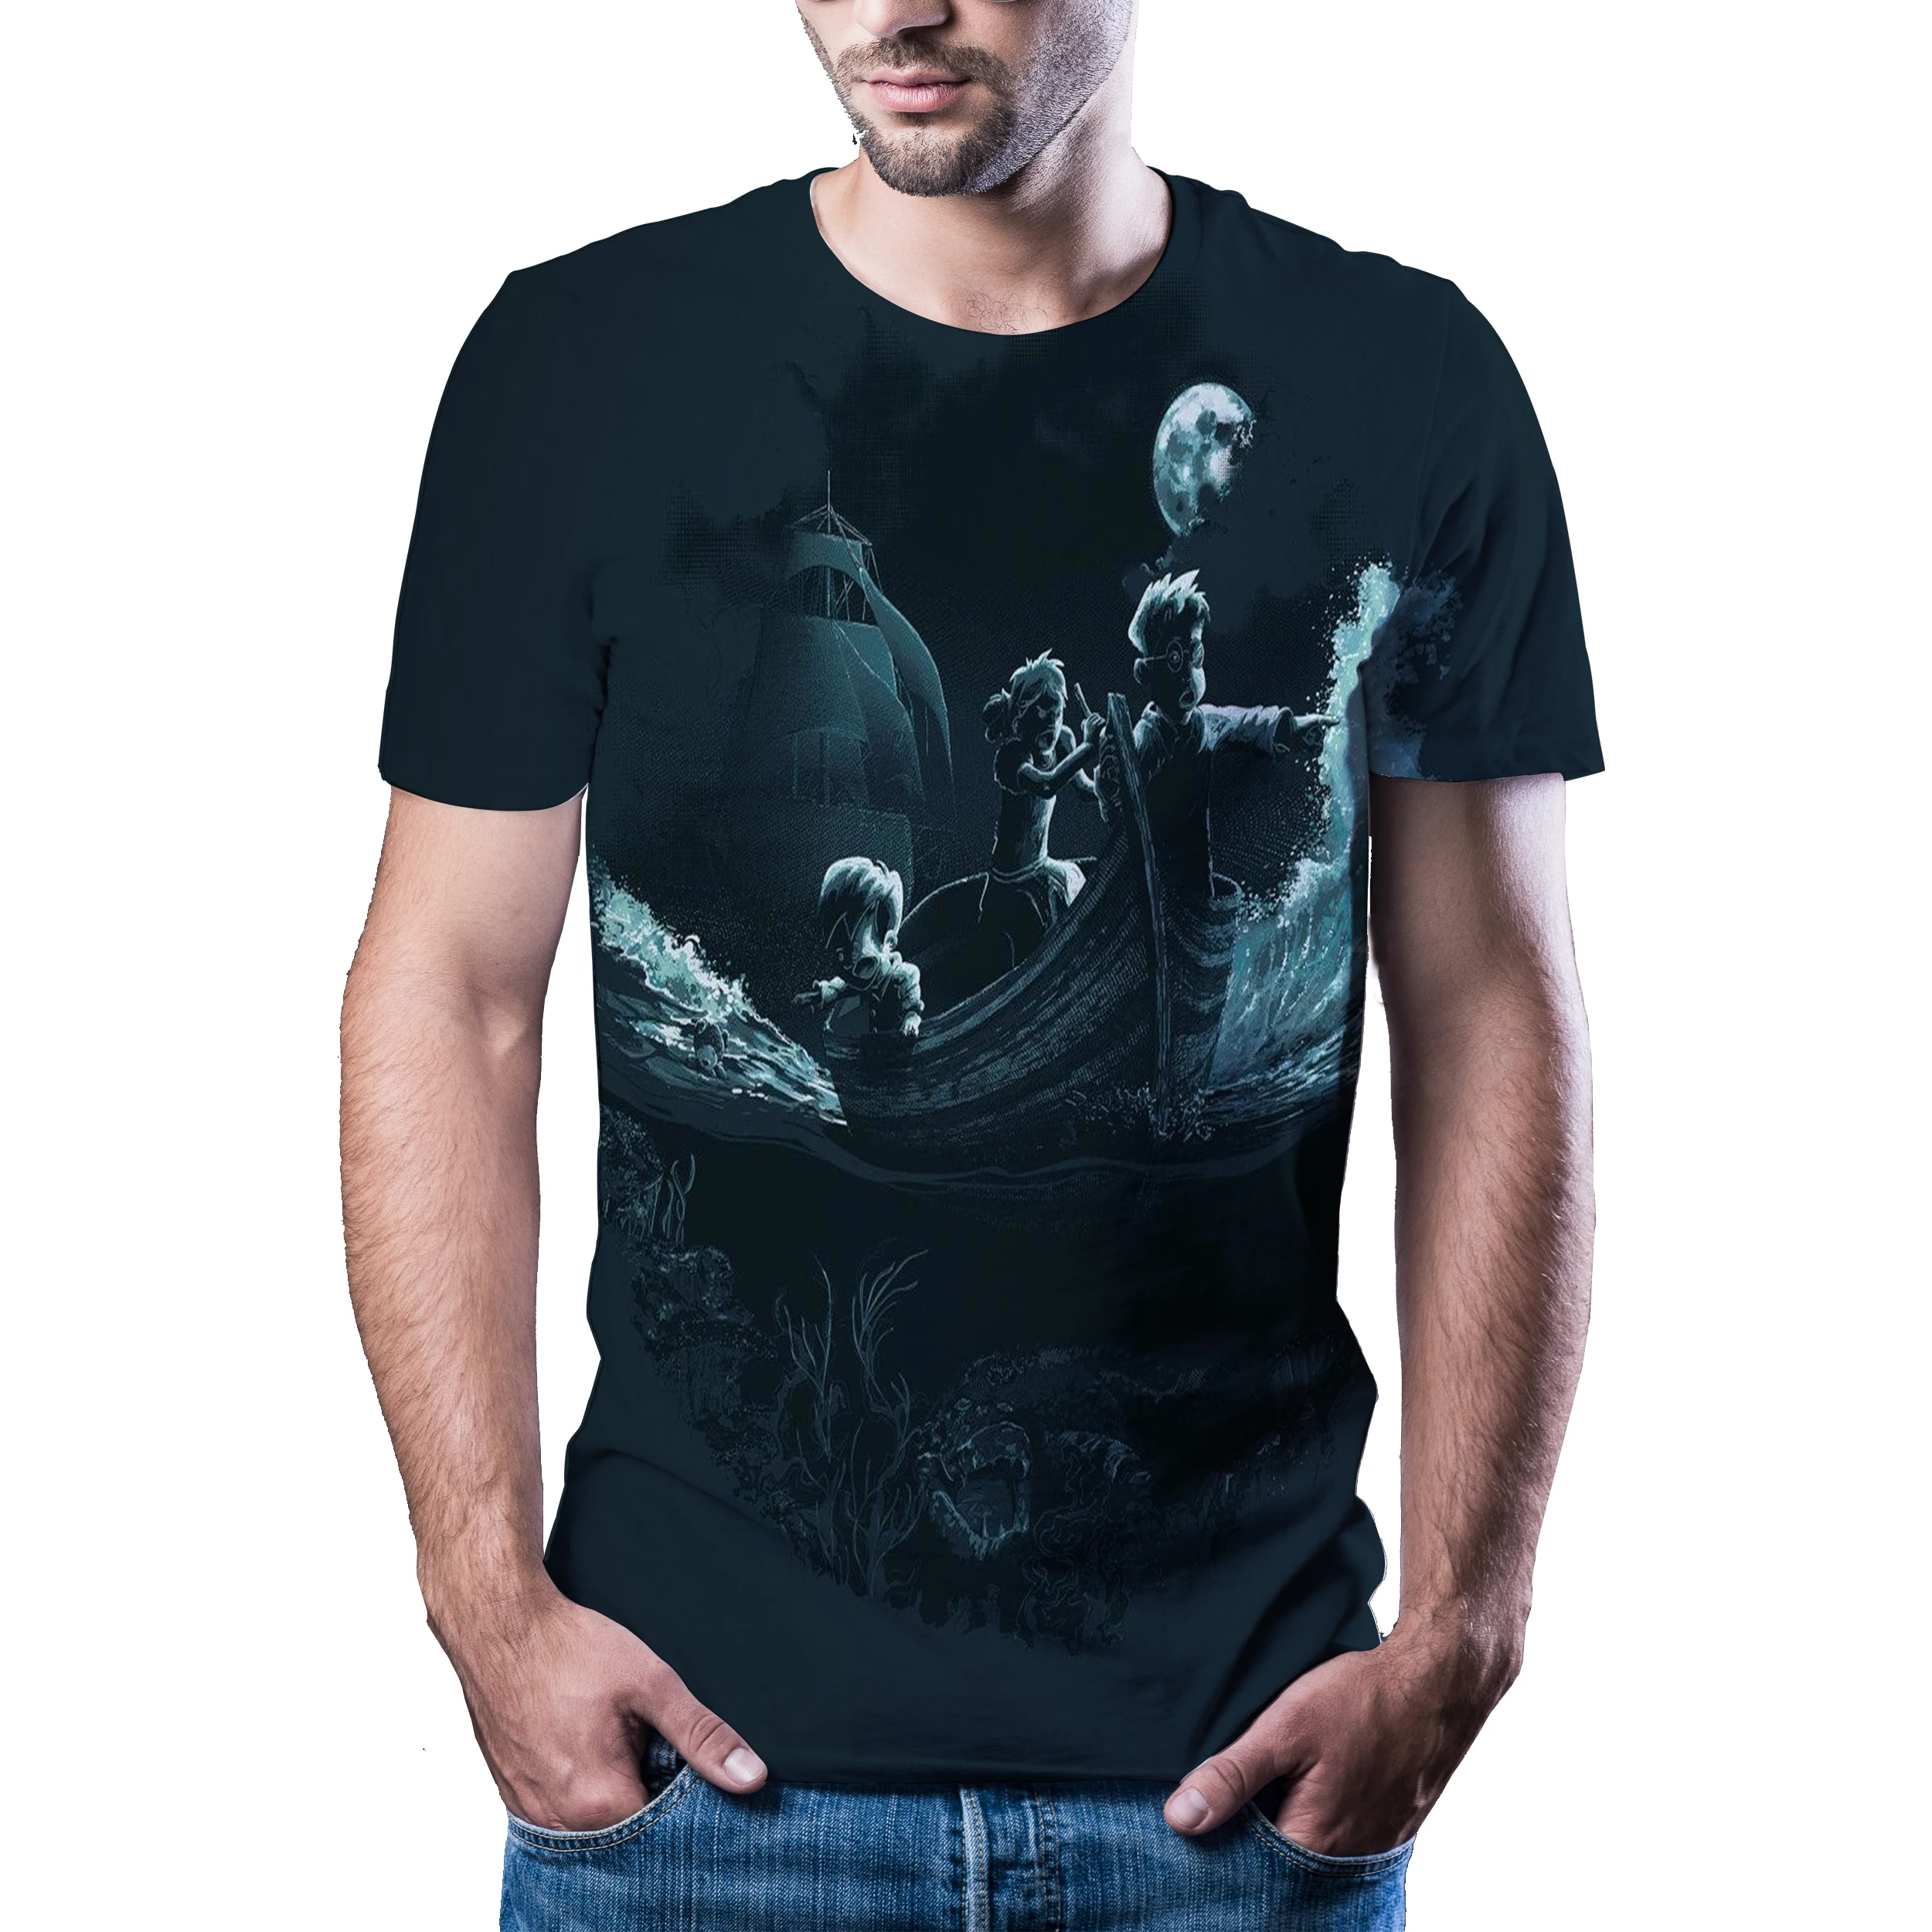 2020 poletje 3D vzorec oko-lov t-shirt moda za moške 3D T-shirt kratek rokav srčkan T-shirt